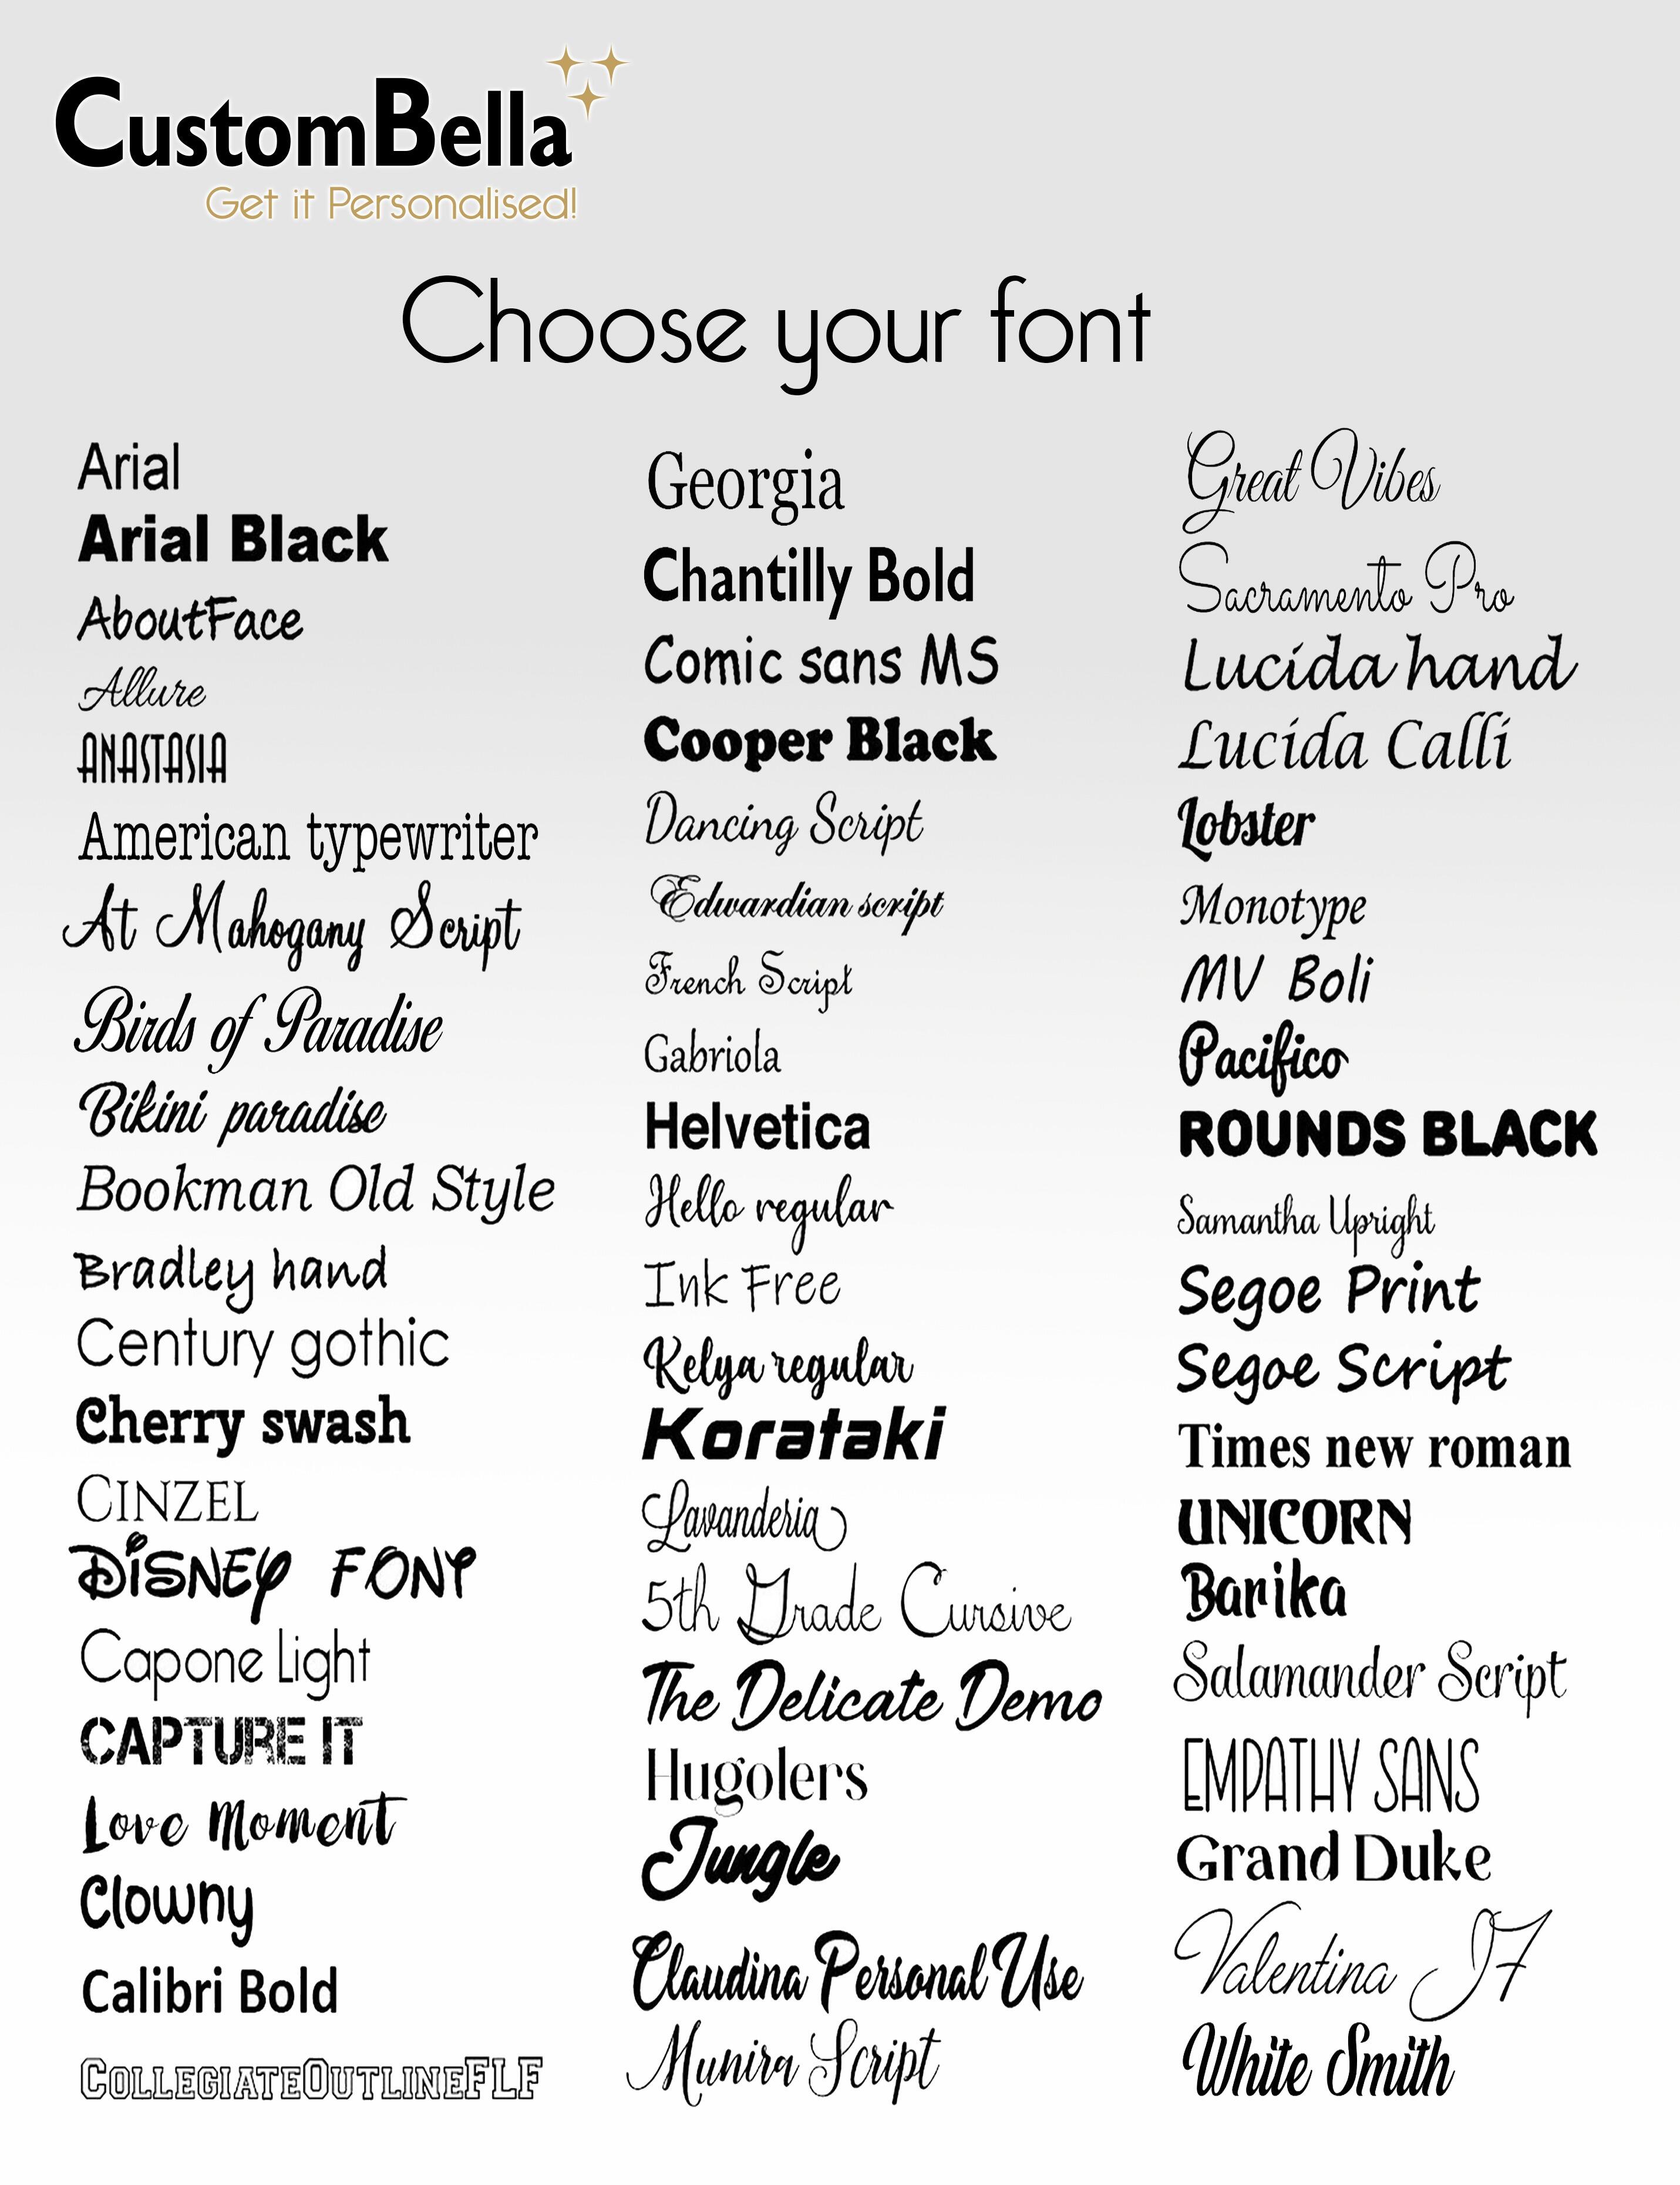 Custombella print fonts to use